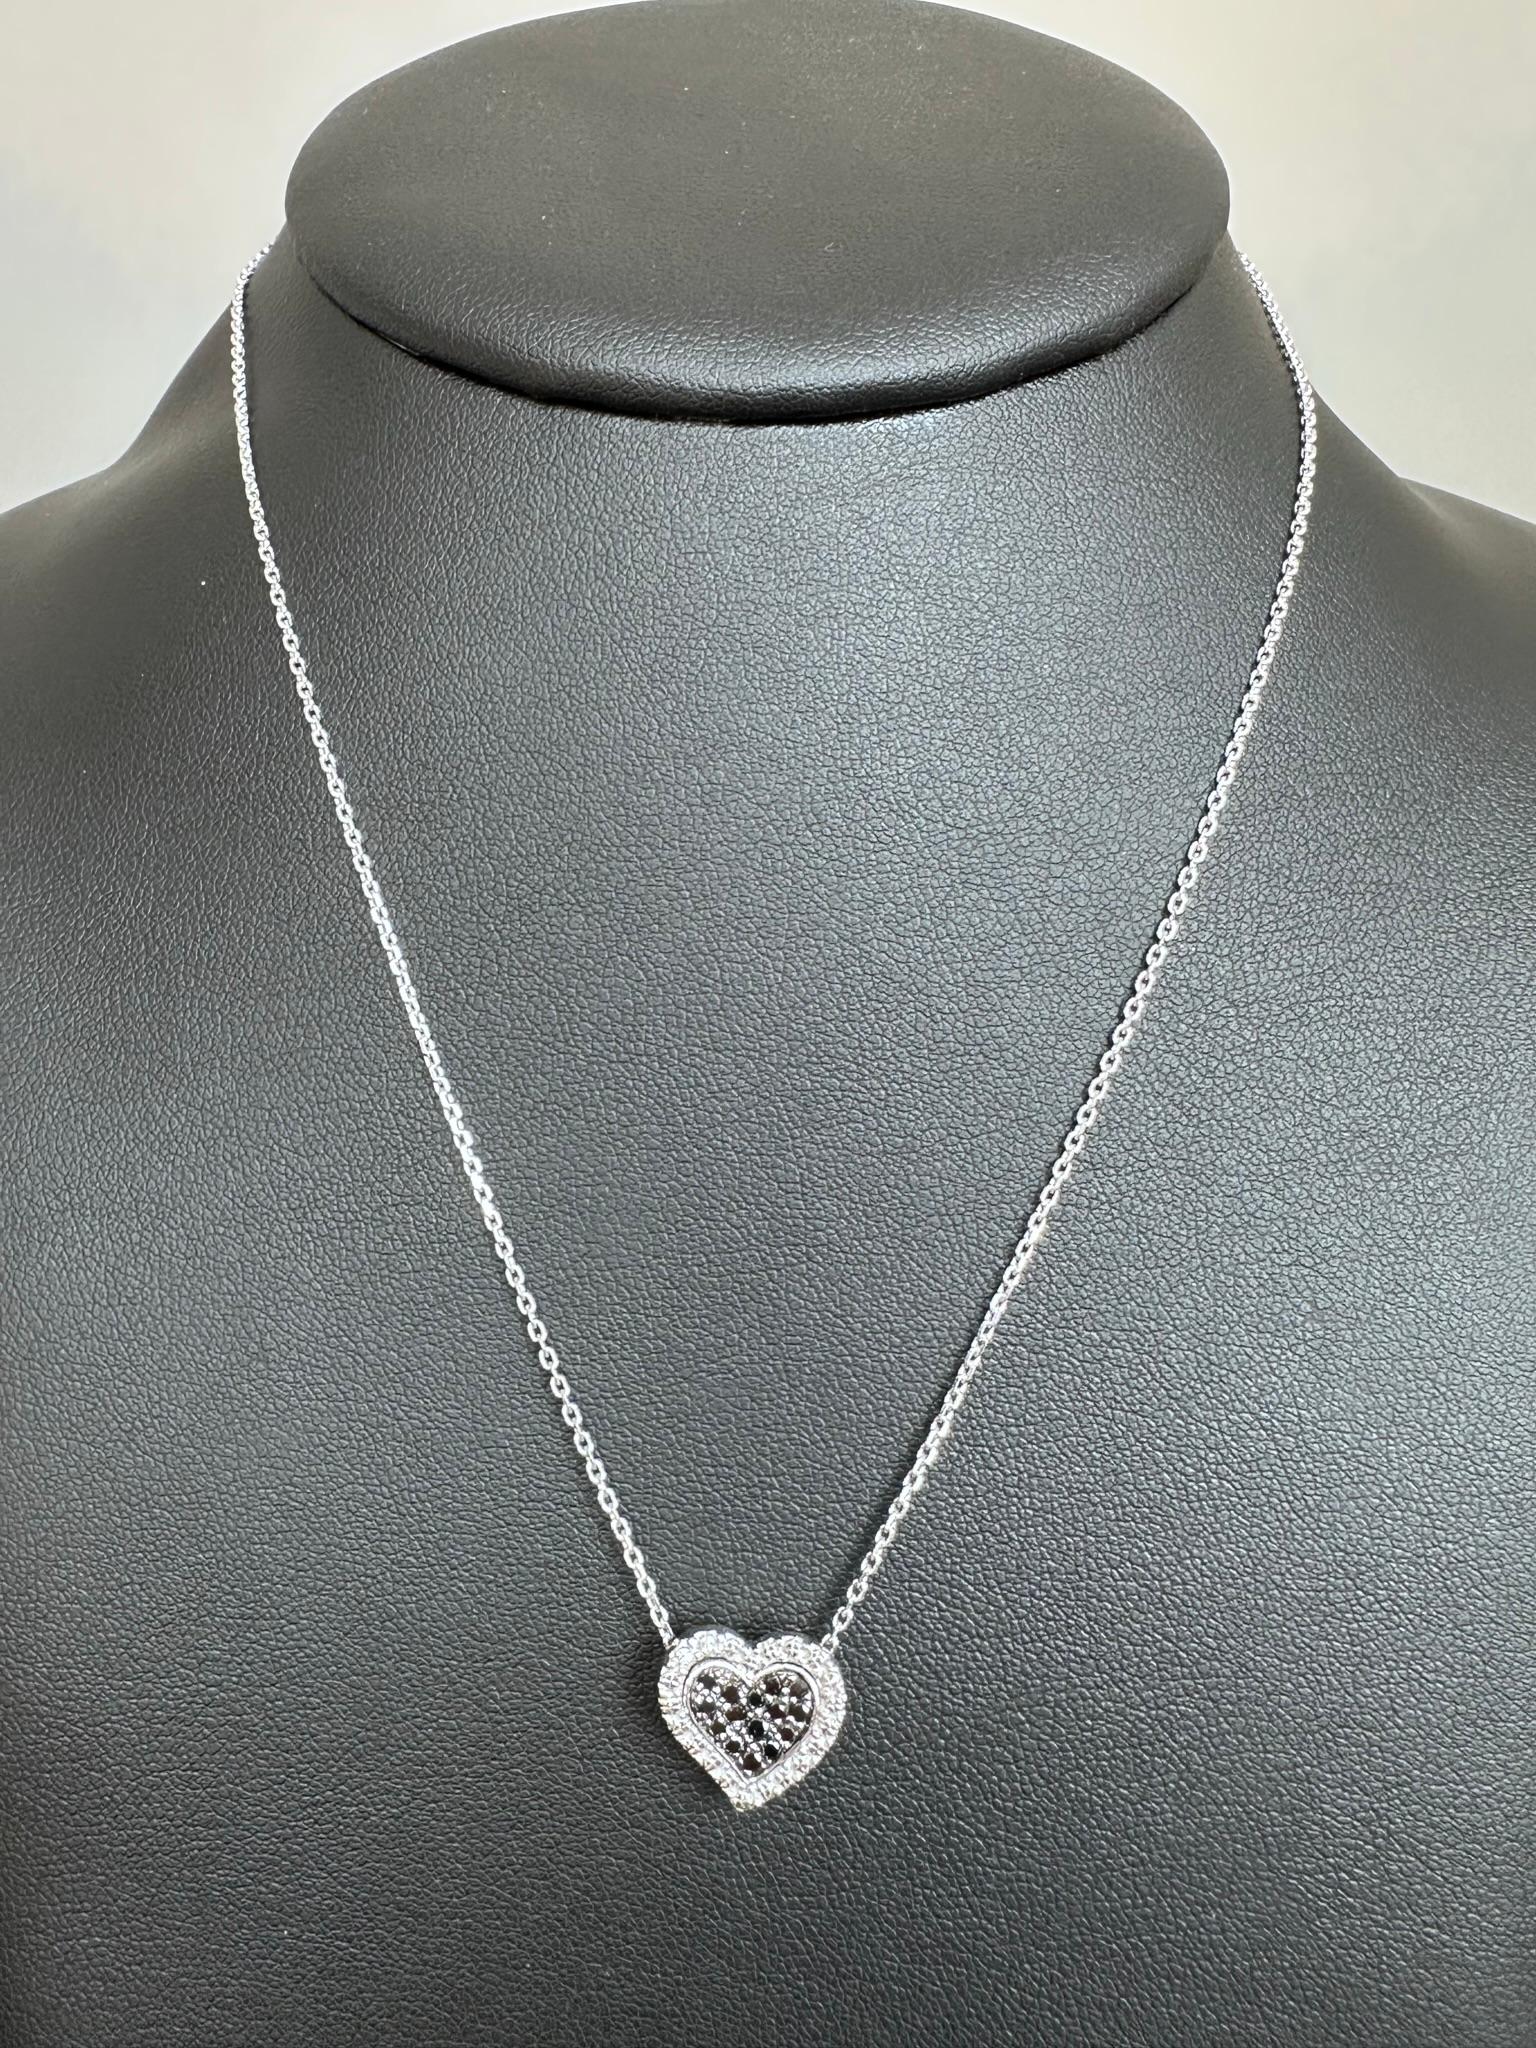 French 18kt White Gold Heart Necklace with Black Diamonds In Good Condition For Sale In Esch sur Alzette, Esch-sur-Alzette